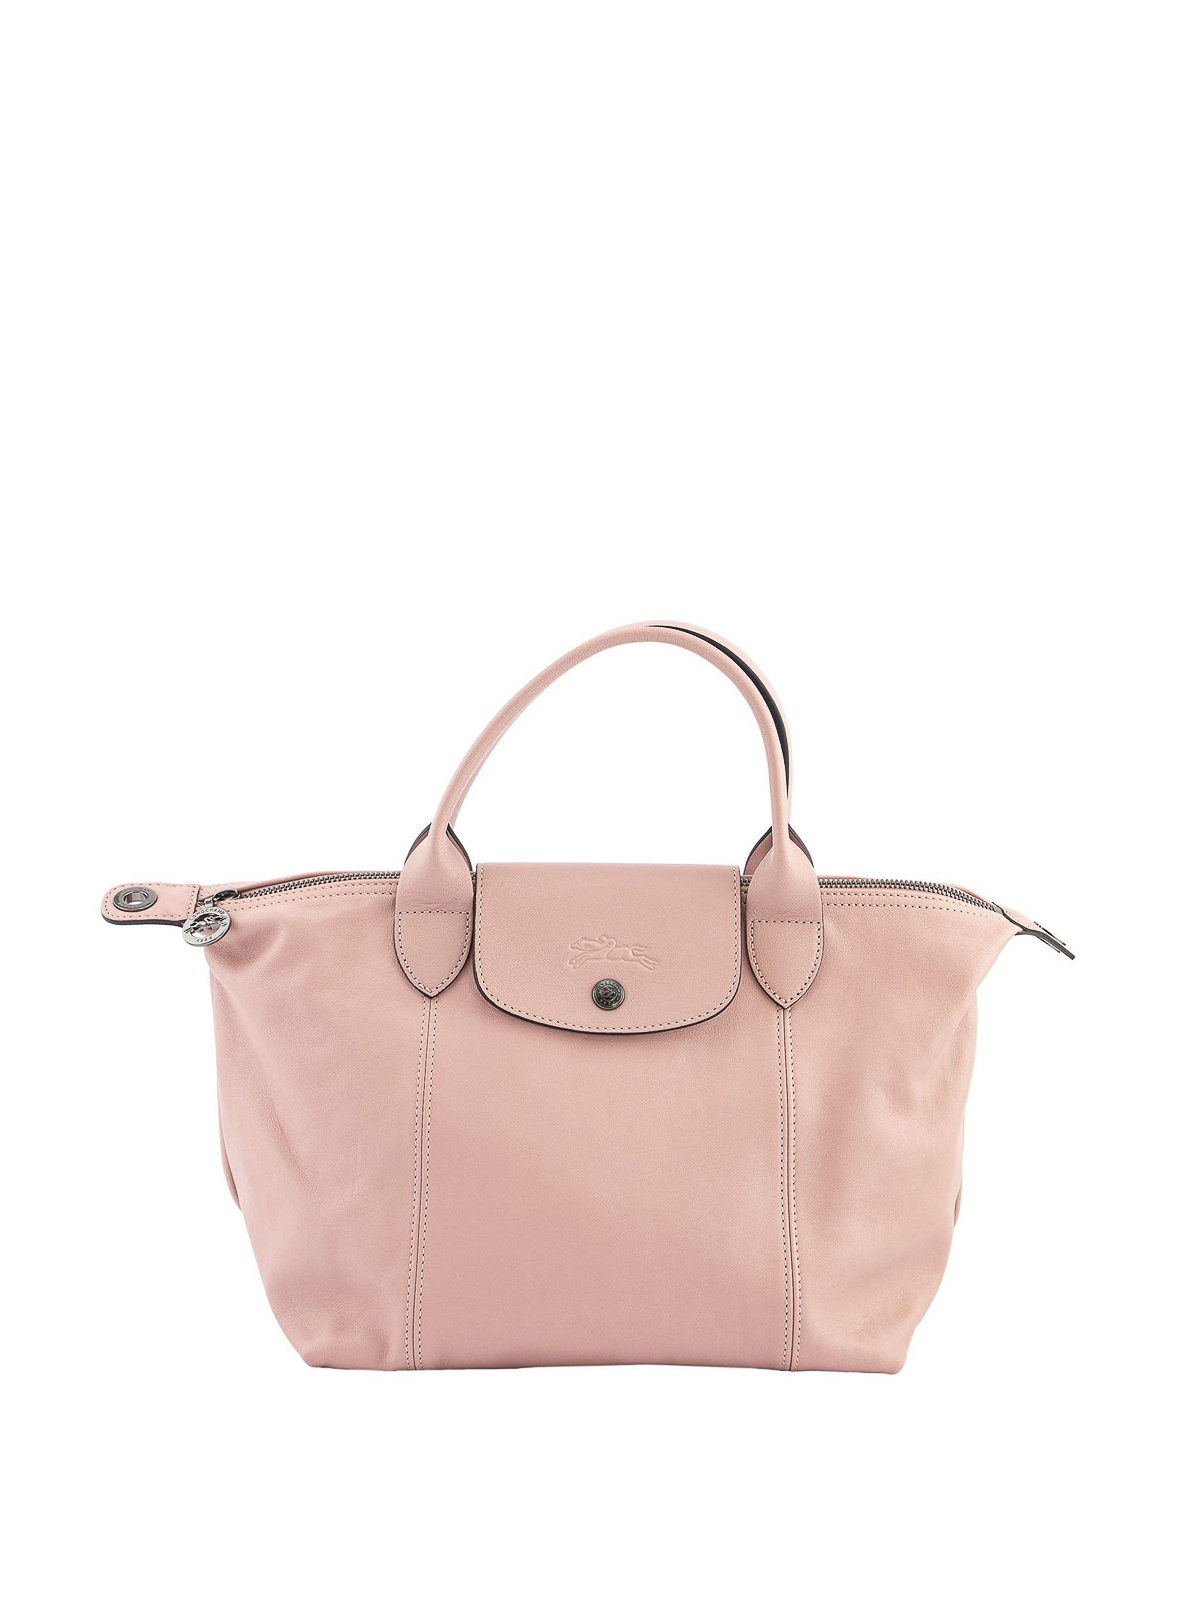 Longchamp pink Small Le Pliage Cuir Top-Handle Bag